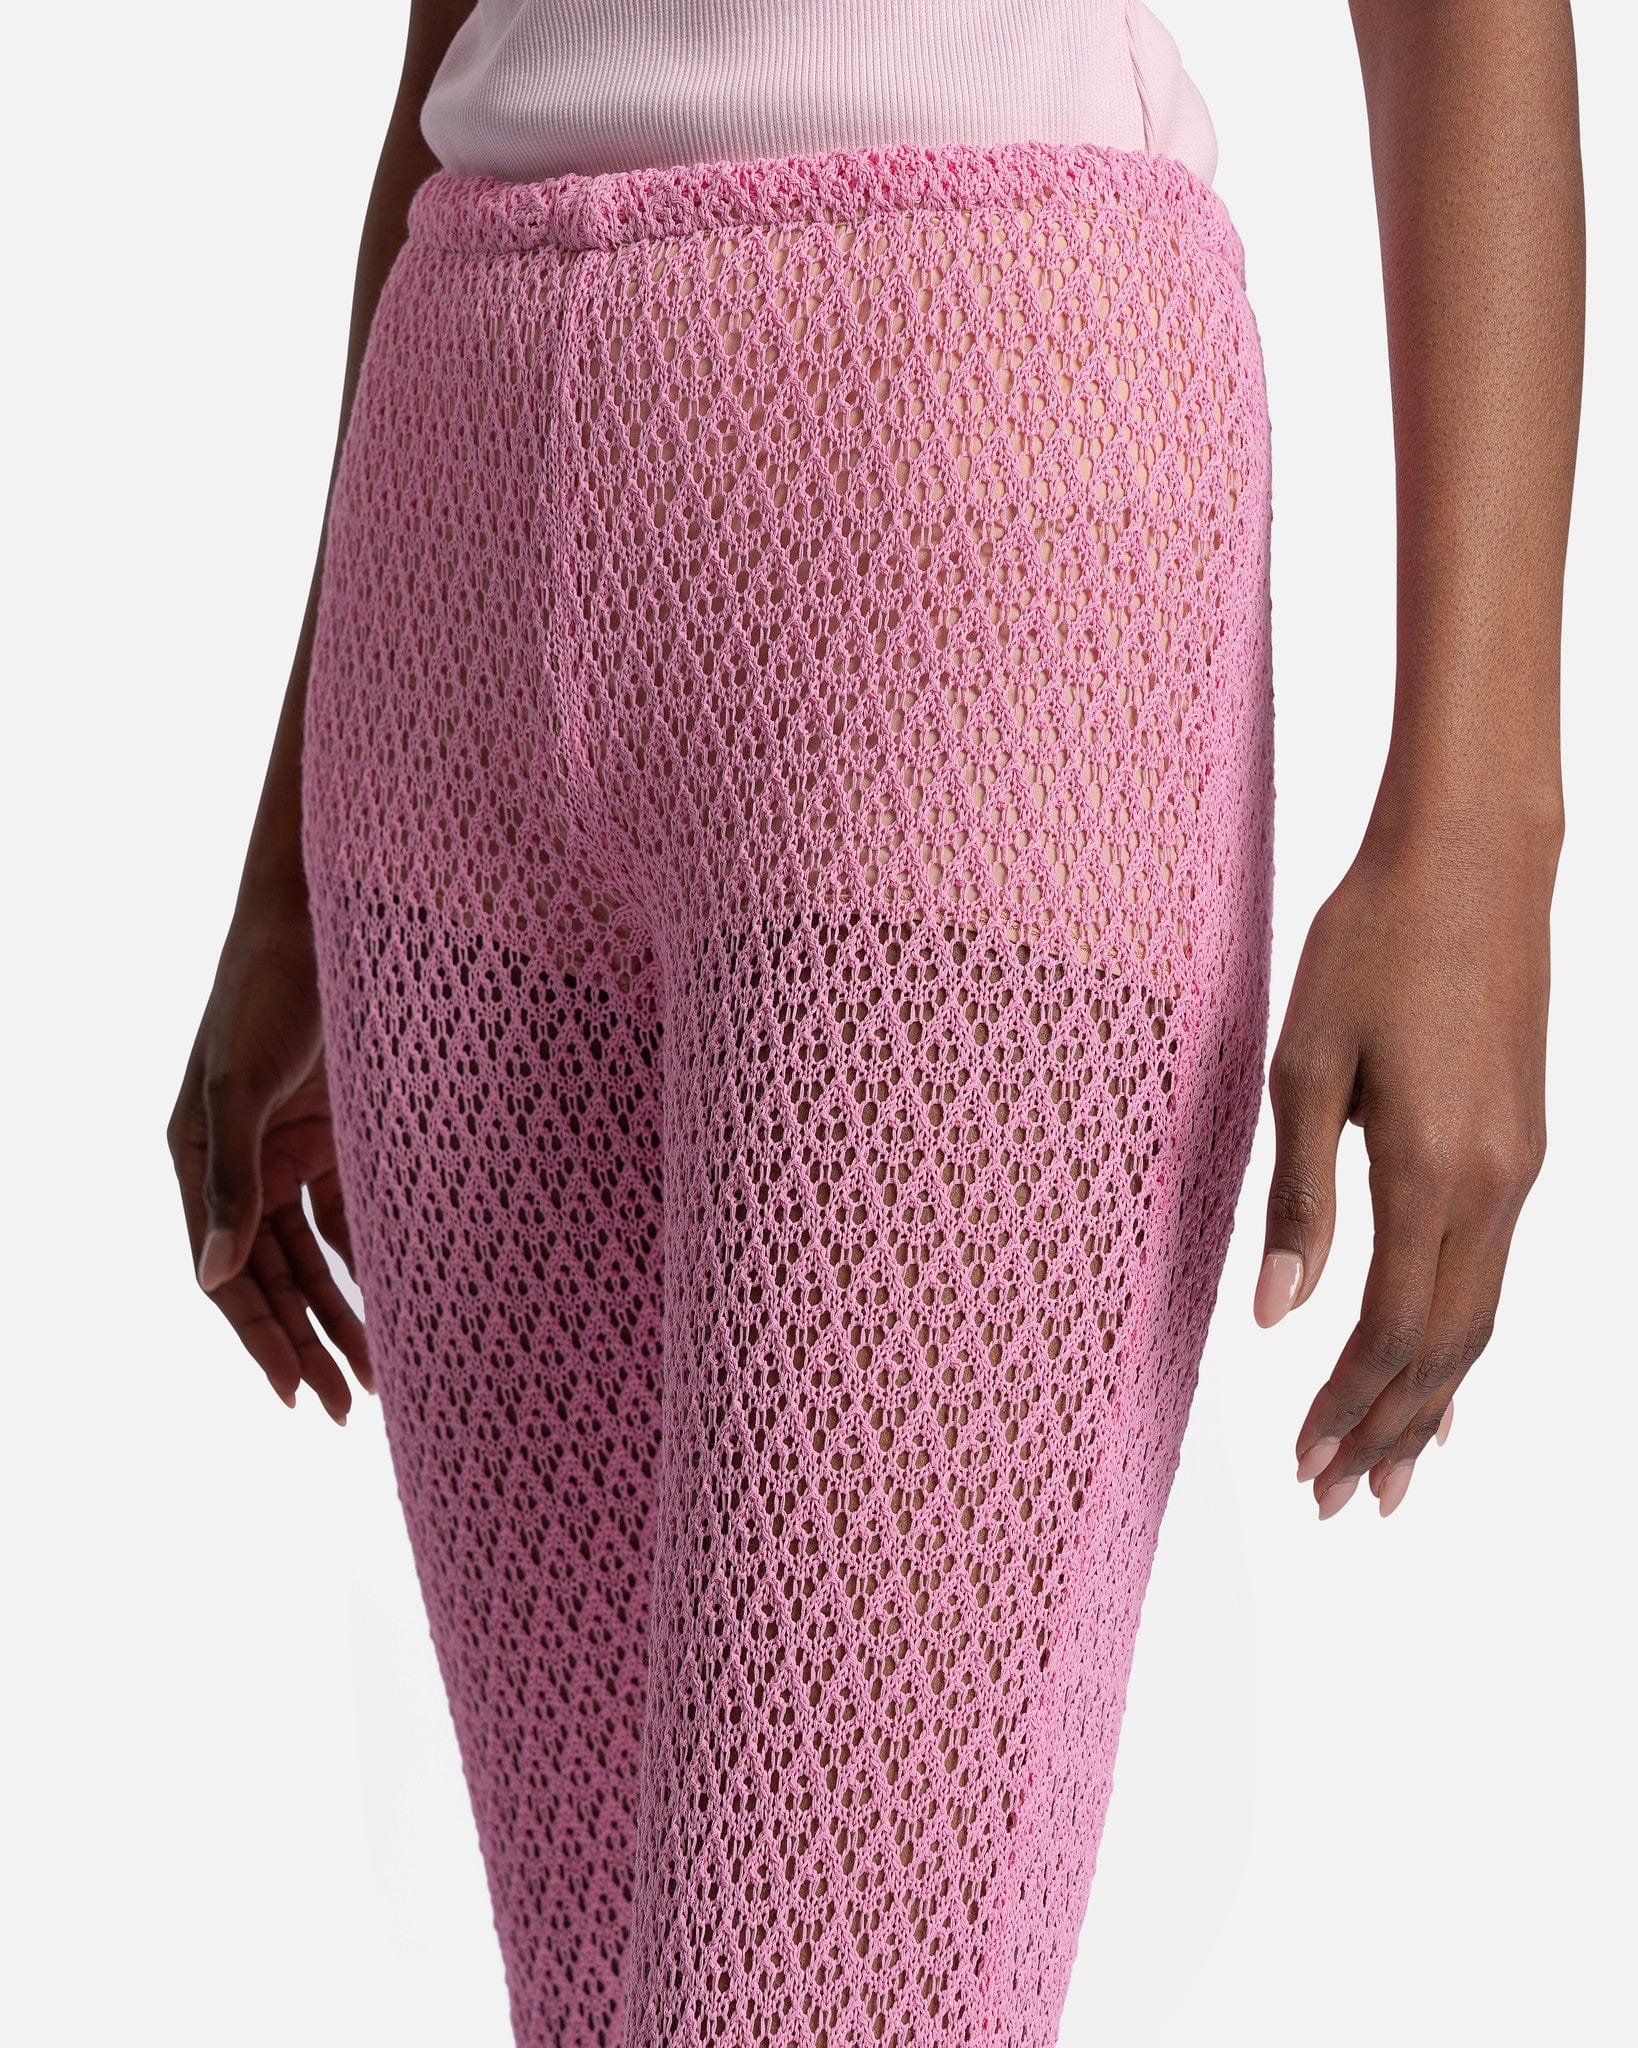 Blumarine Women Pants Crochet-Knit Scallop Edge Pants in Bubblegum